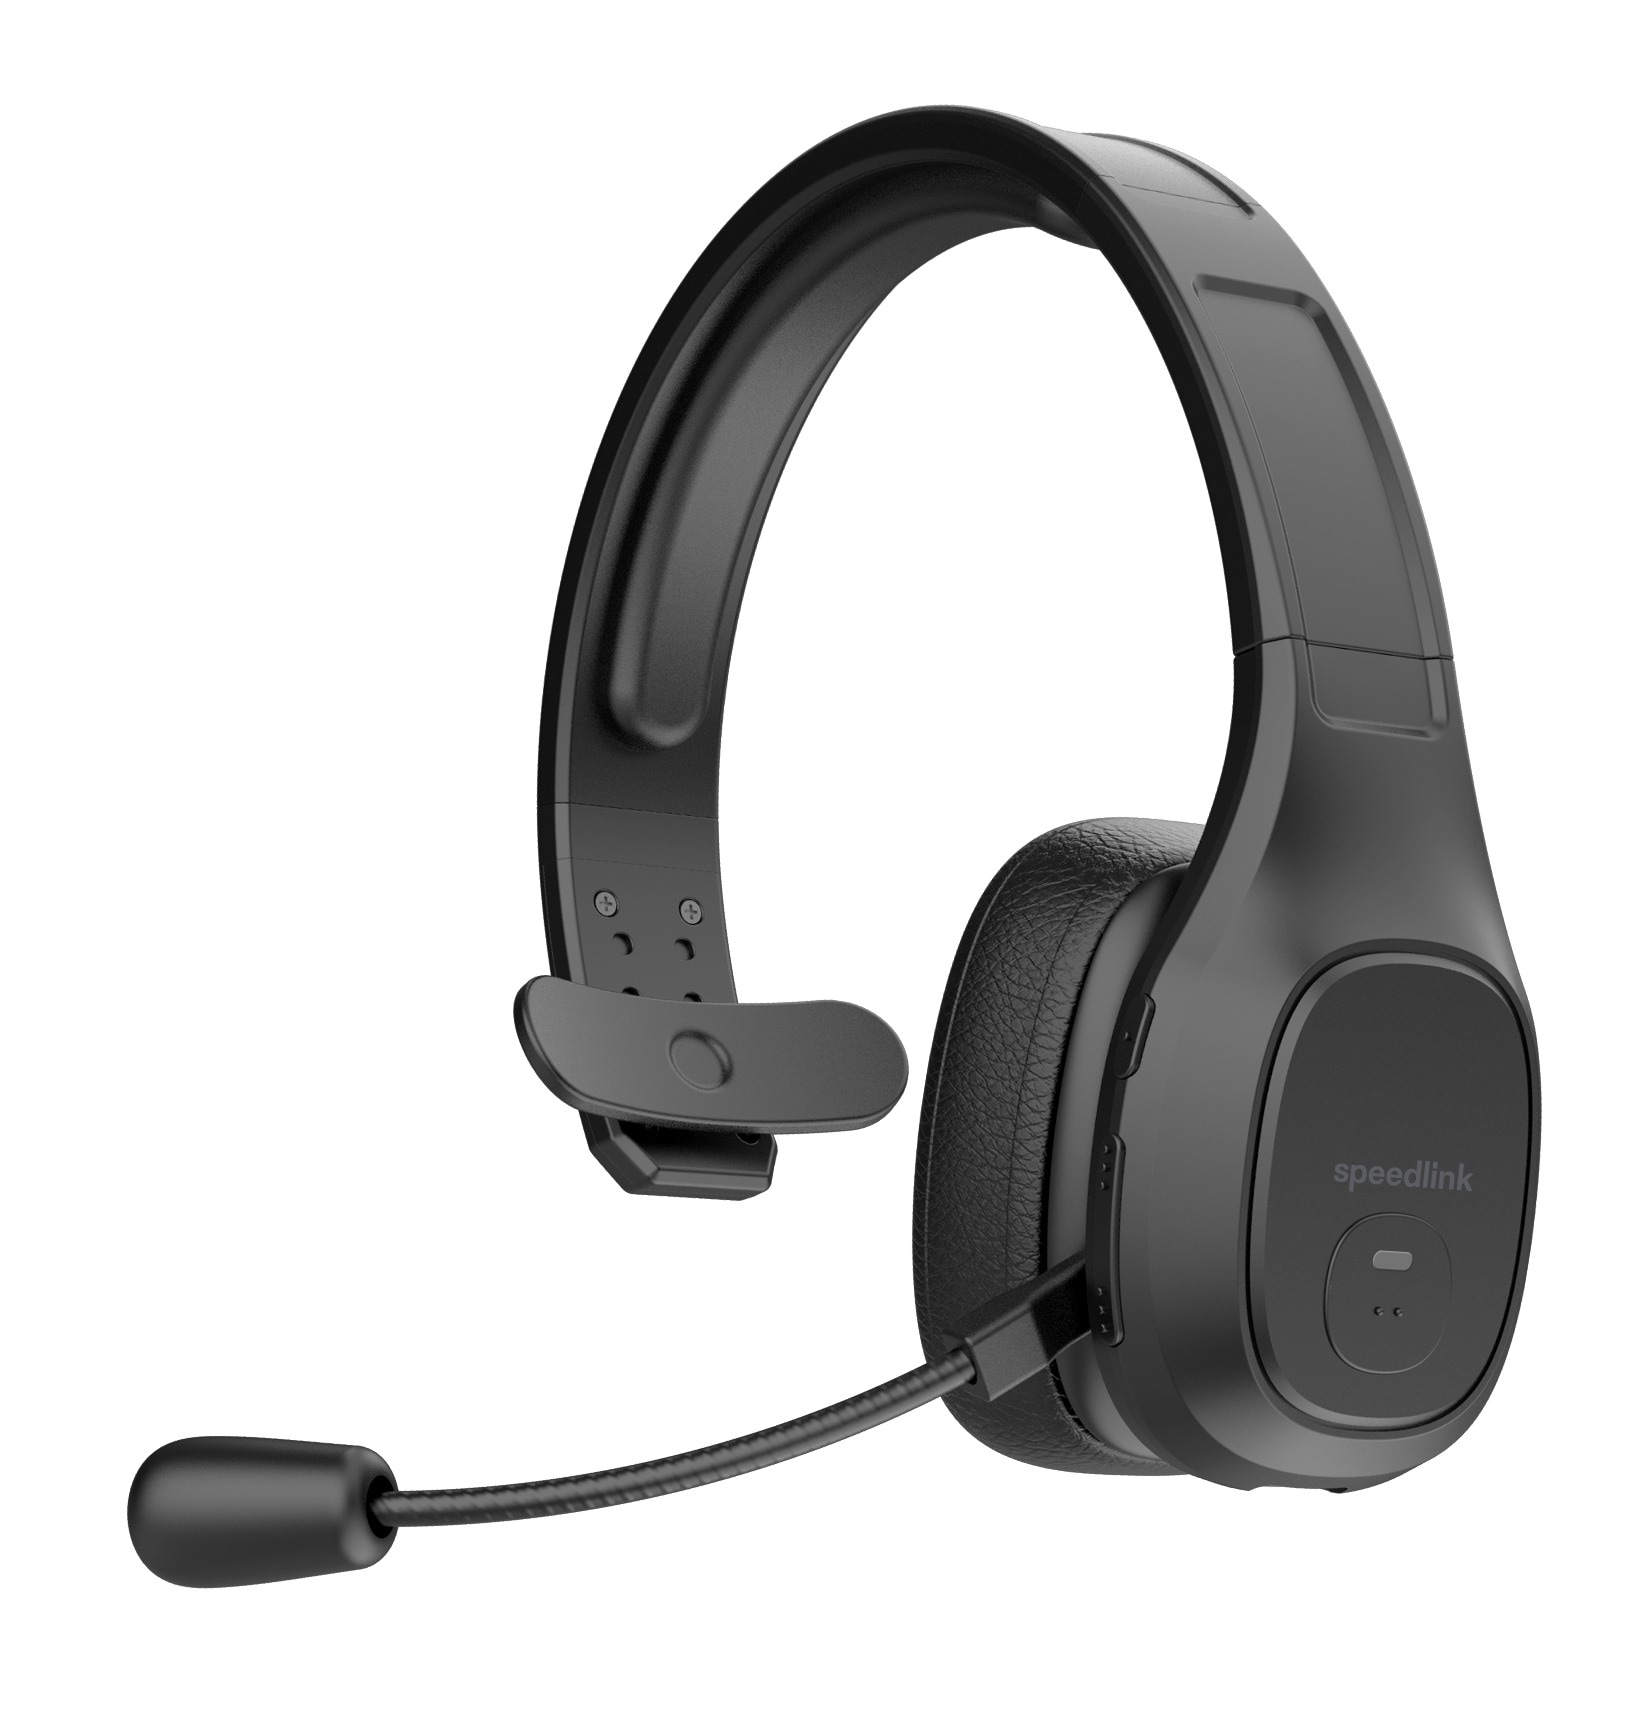 Wireless-Headset »SONA Bluetooth Chat Headset«, mit Noise-Cancelling-Mikrofon